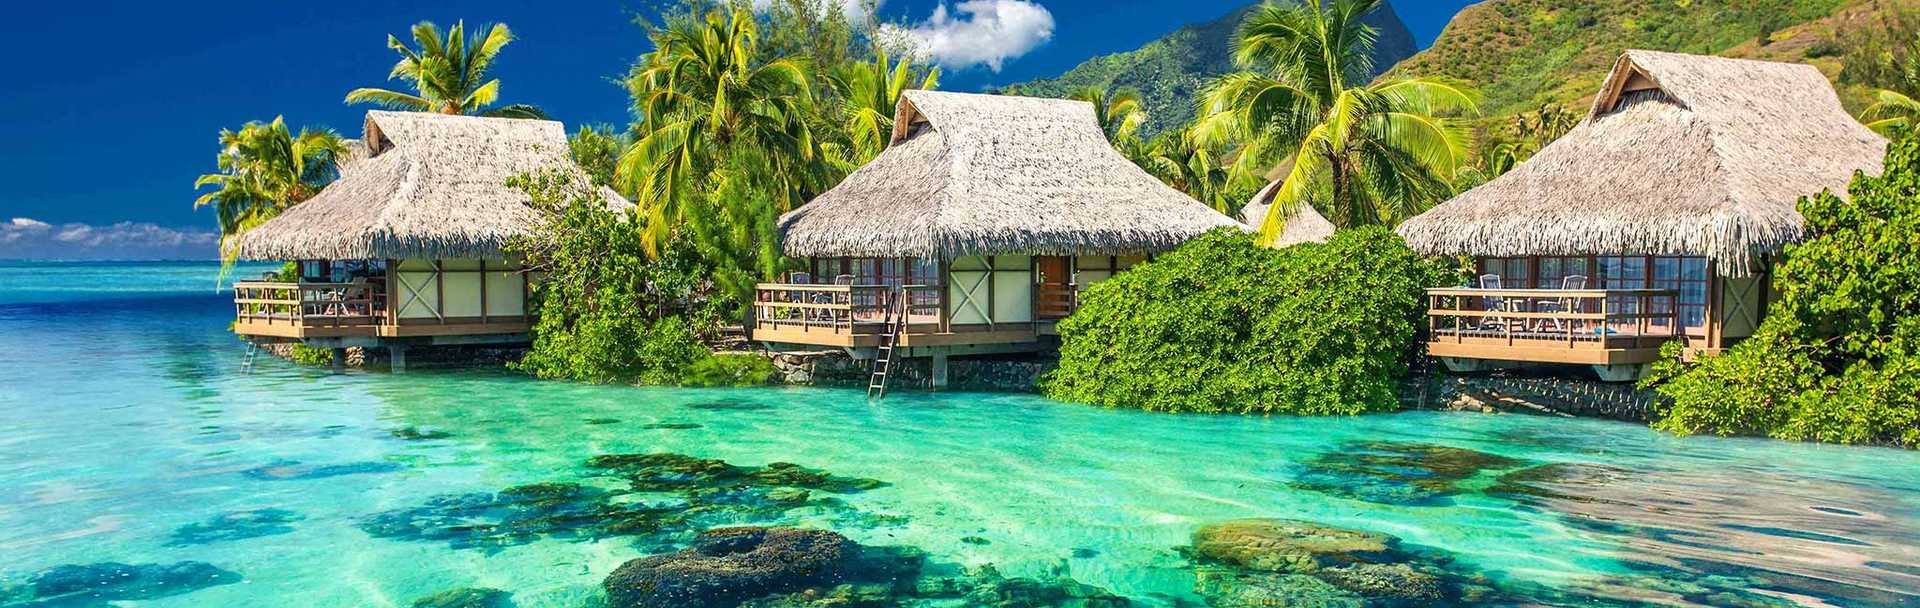 Luxury Fiji overwater bungalows